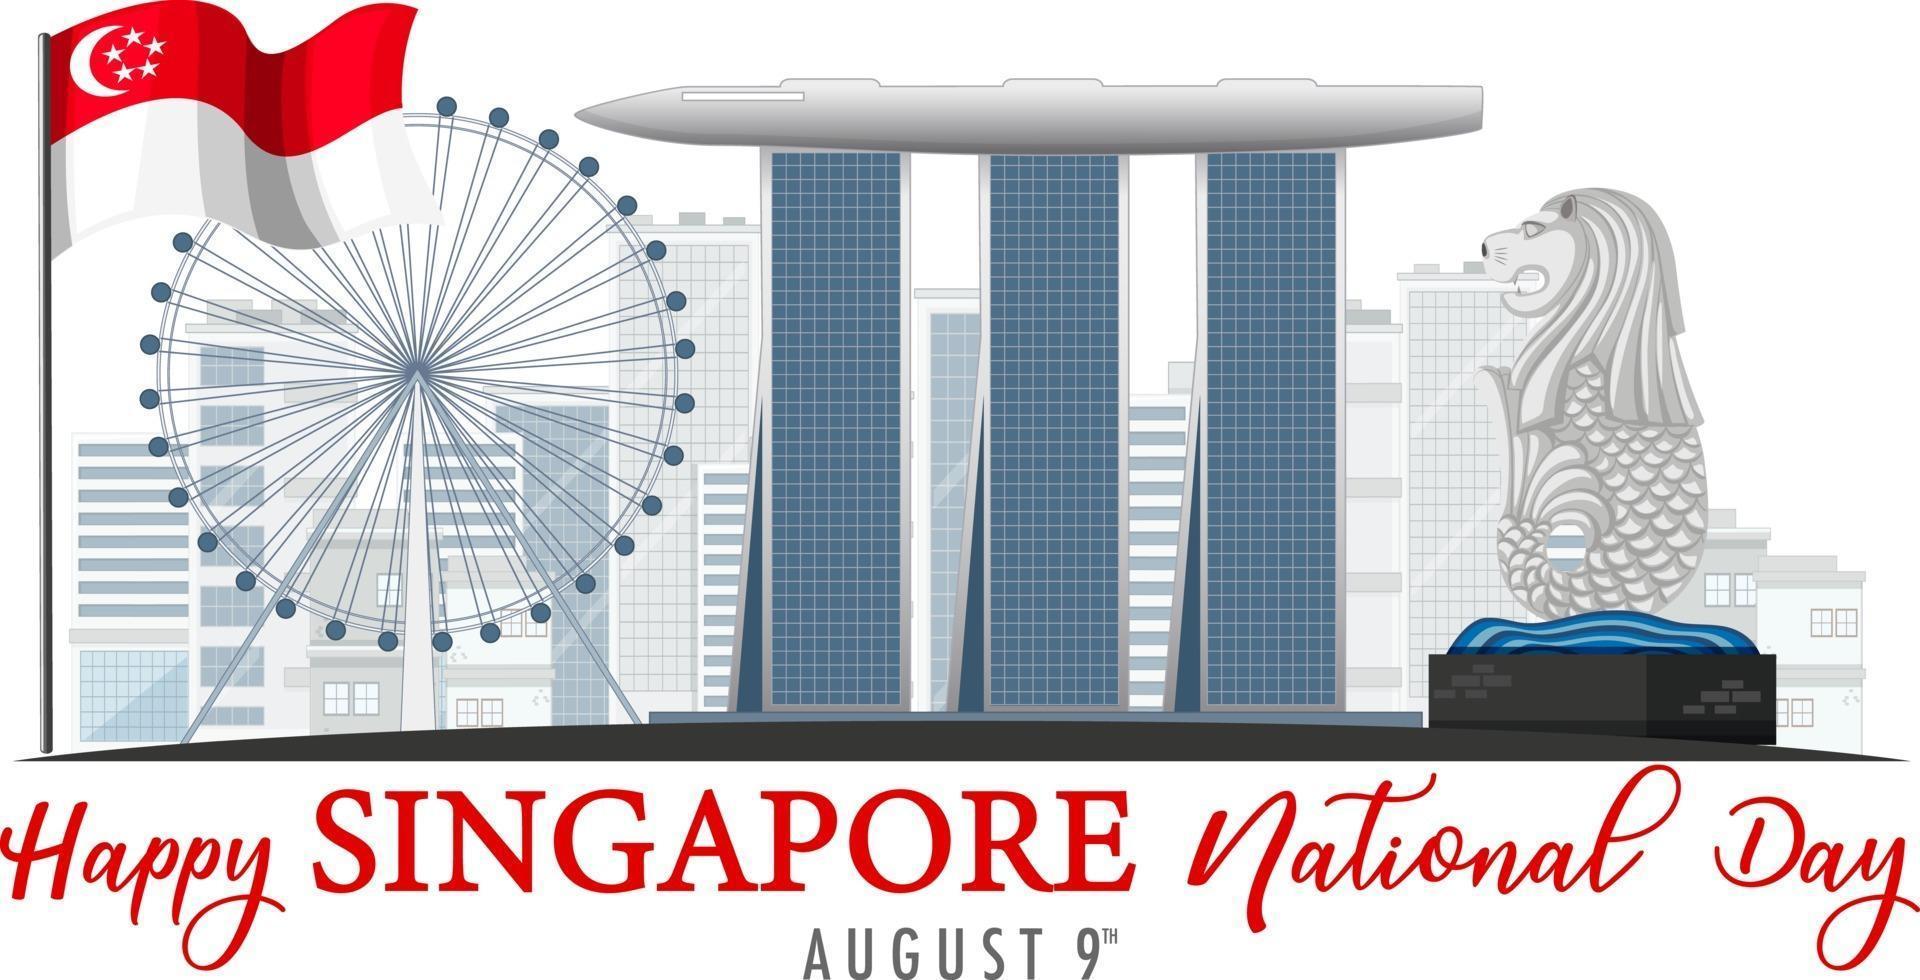 singapur national day banner mit marina bay sands singapur vektor